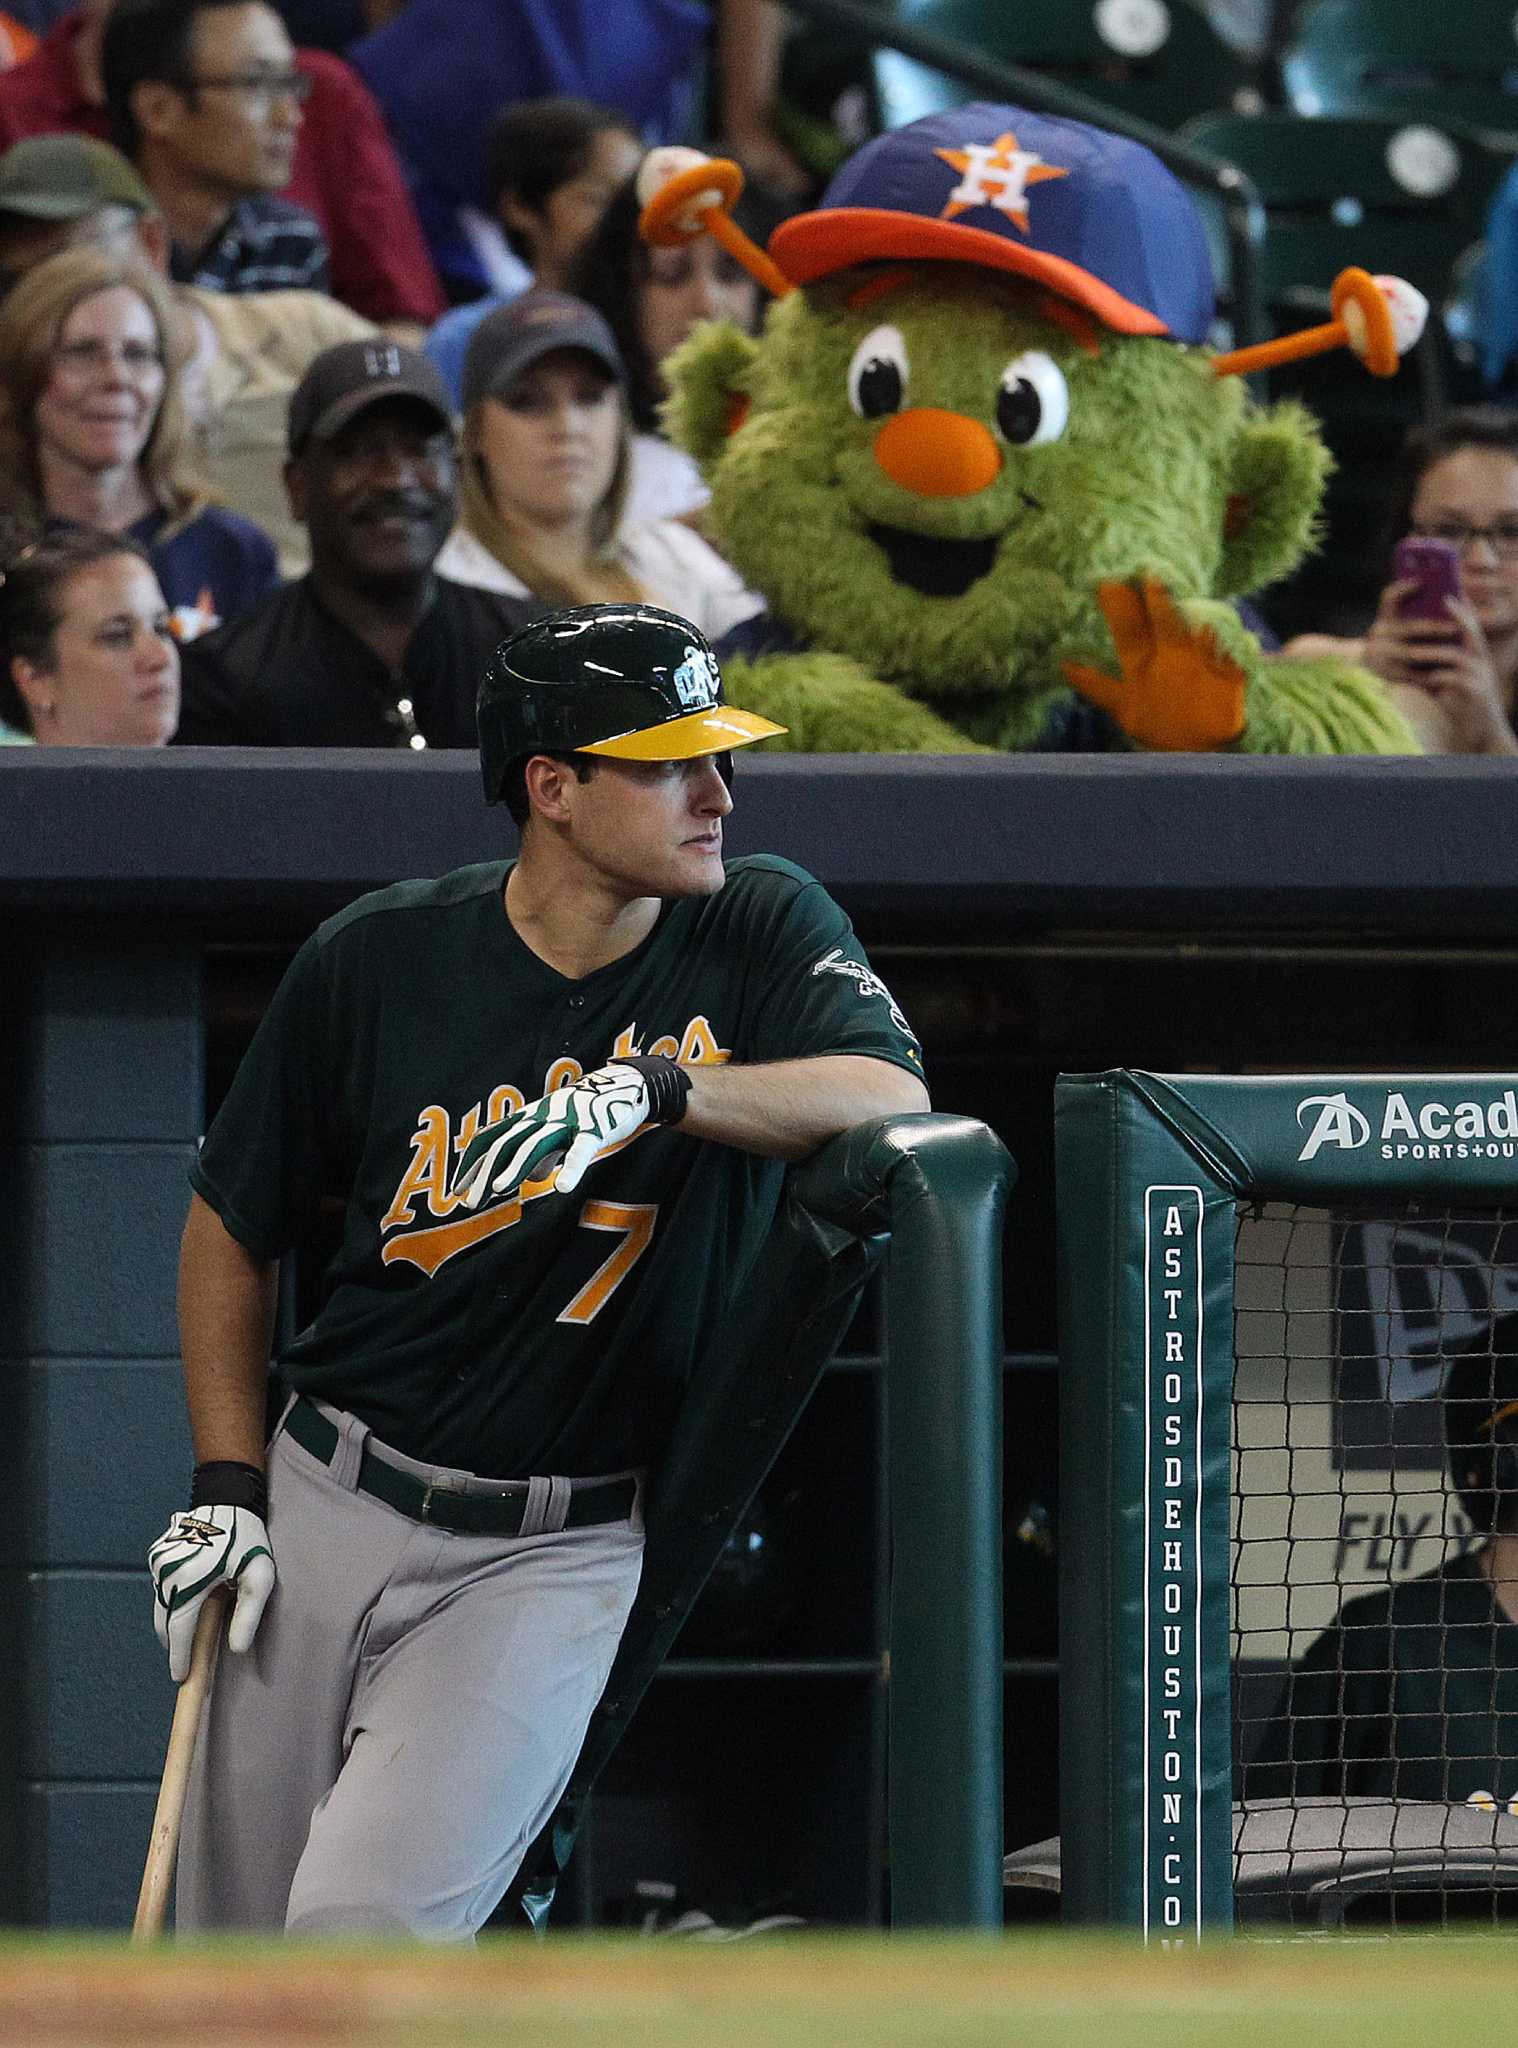 Rays pitcher Chris Archer's feud with Astros' mascot, Orbit, escalates